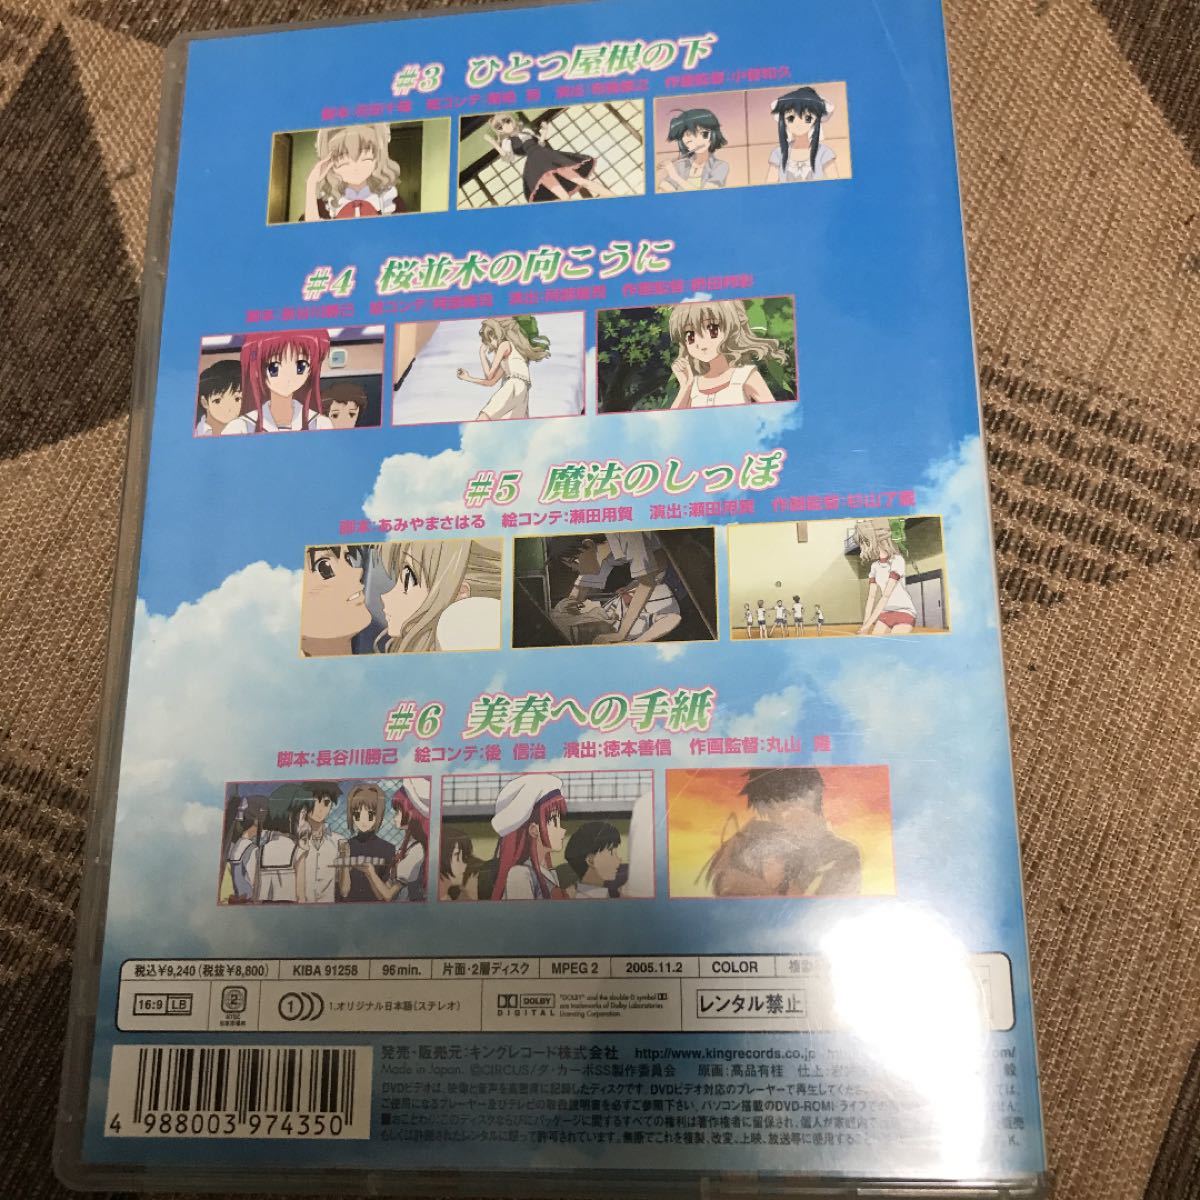 D.C.S.S.～ダ・カーポ セカンドシーズン～ DVD Ⅱ